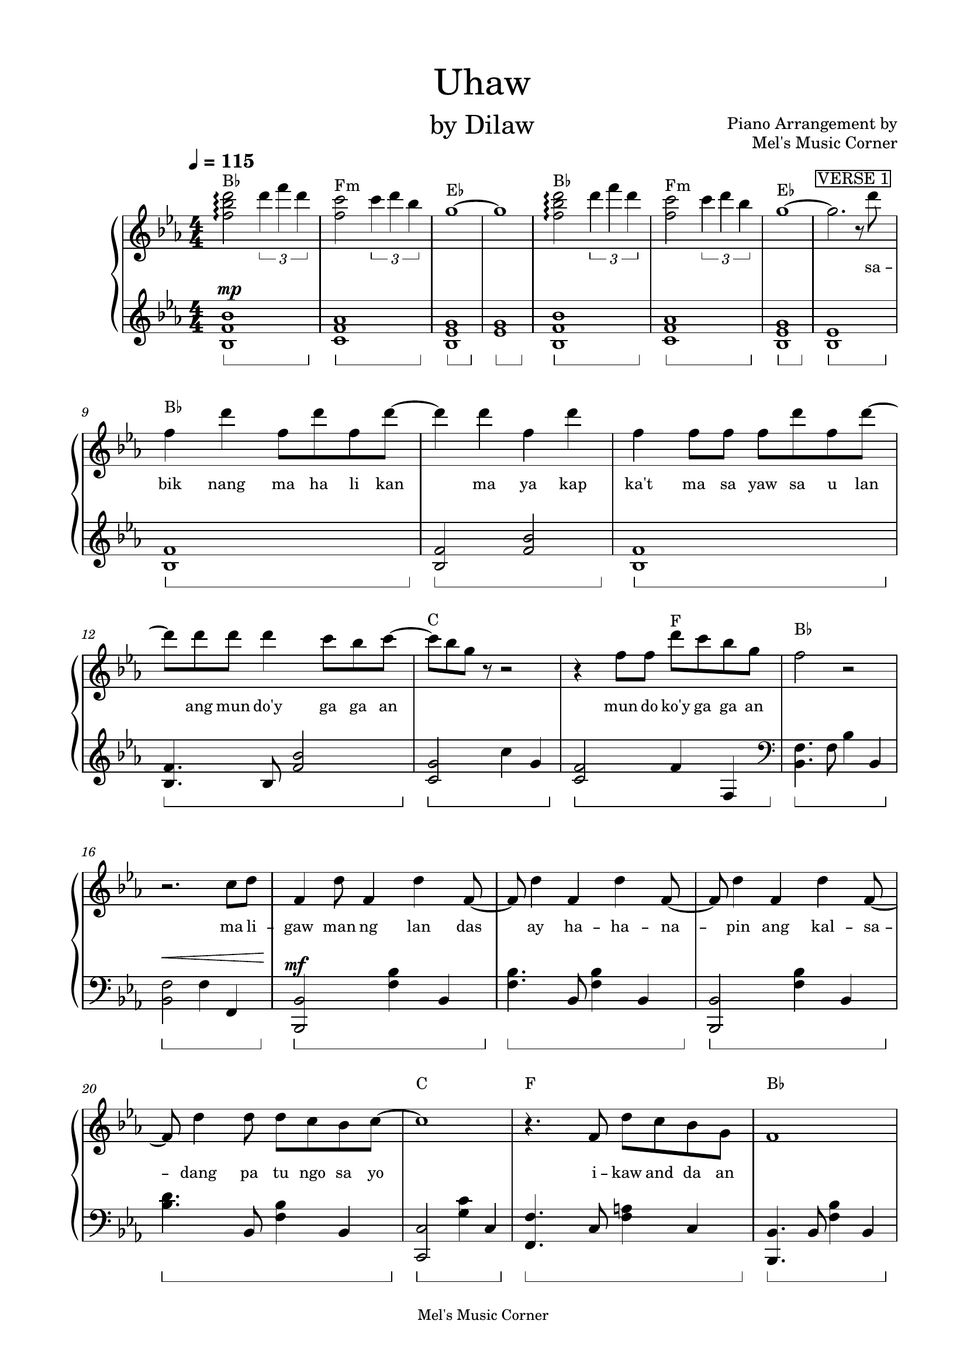 Dilaw - Uhaw (piano sheet music) Spartito by Mel's Music Corner